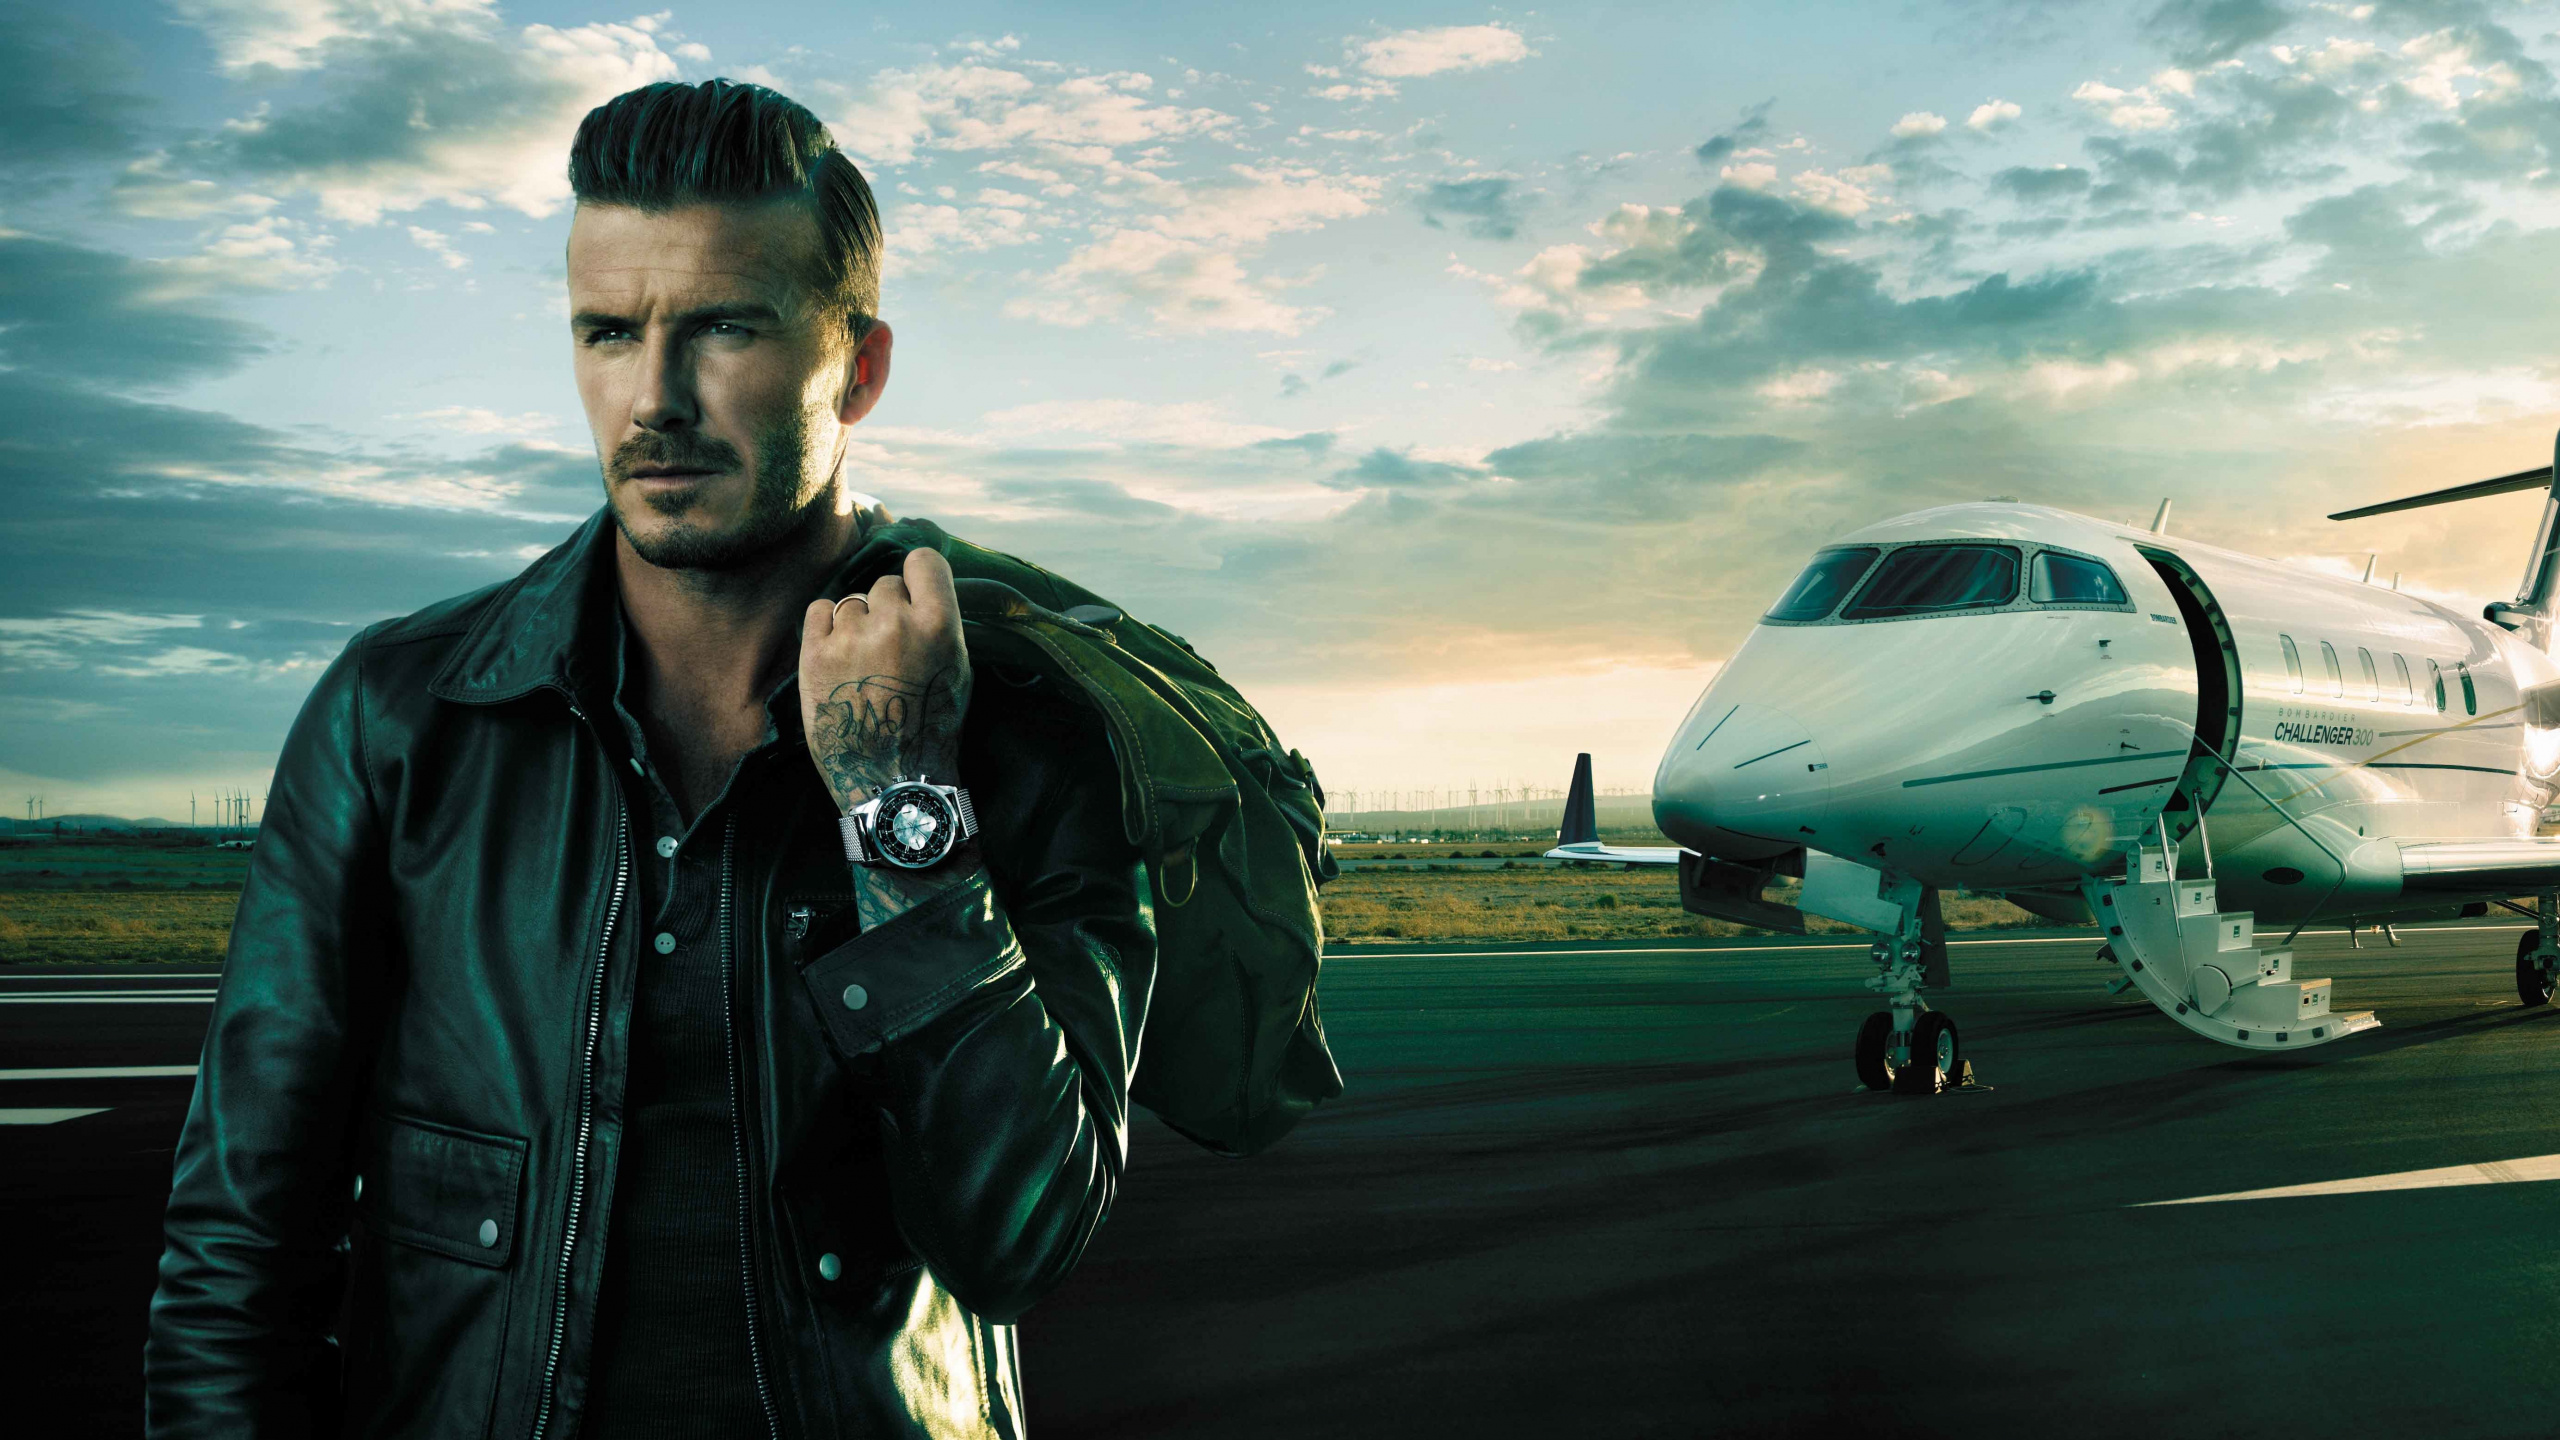 David Beckham, Breitling SA, Génie Aérospatial, Avion, Air Voyage. Wallpaper in 2560x1440 Resolution